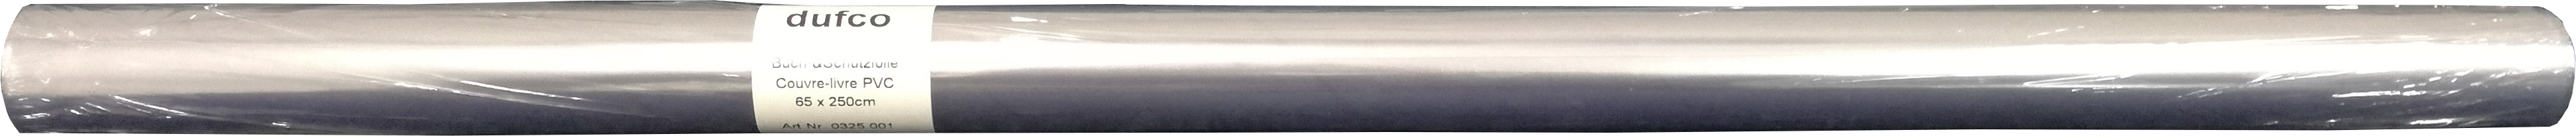 DUFCO Drachenhaut 65cmx250cm 0325.001 transparent, 80my transparent, 80my